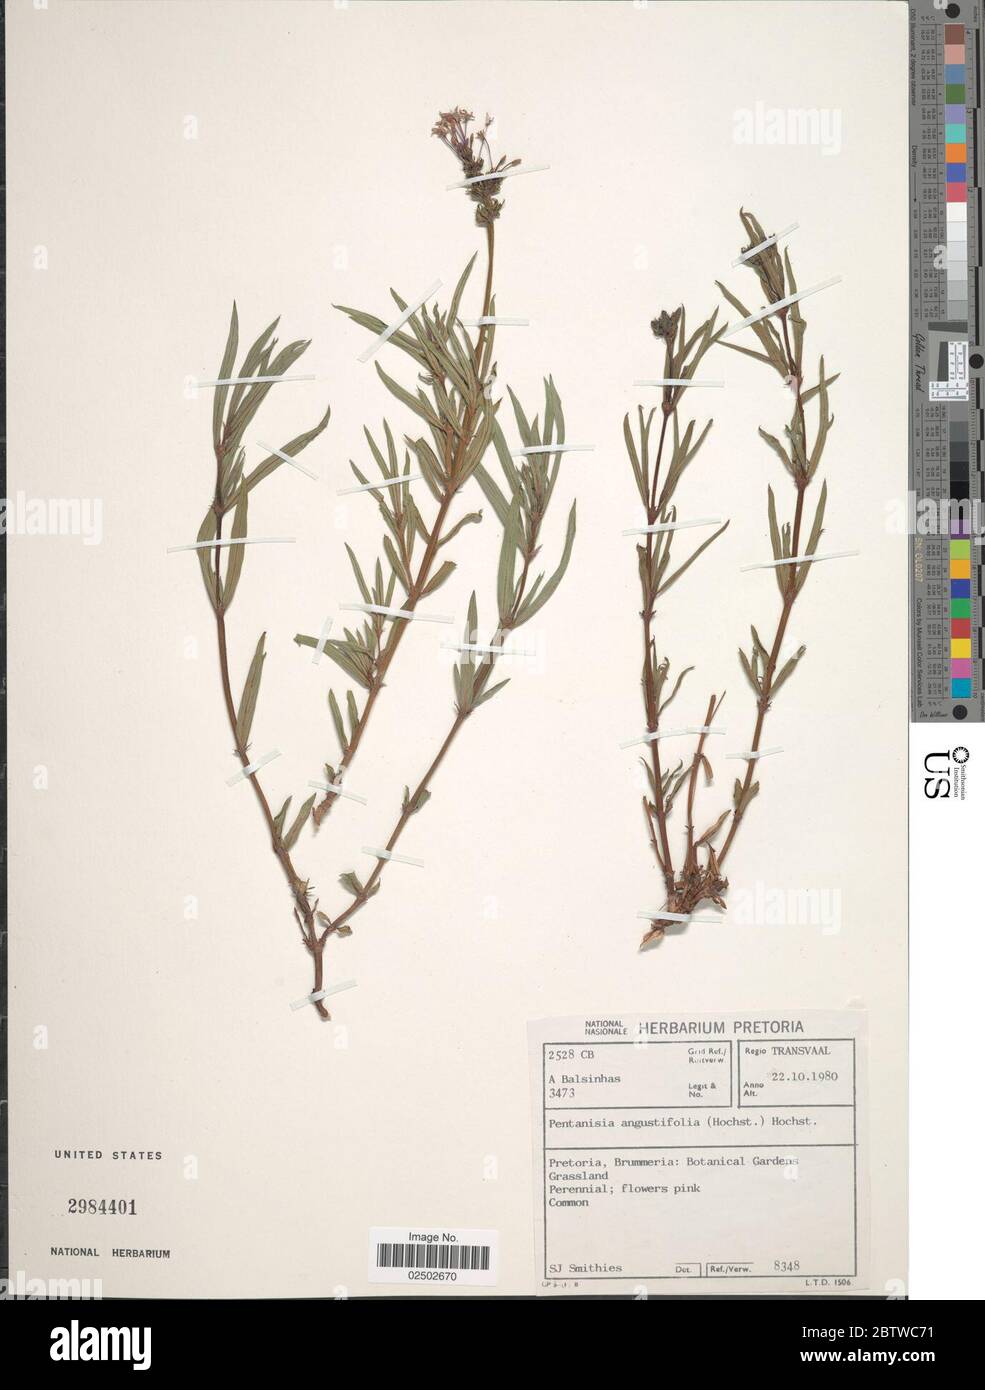 Pentanisia angustifolia Hochst Hochst. Stock Photo